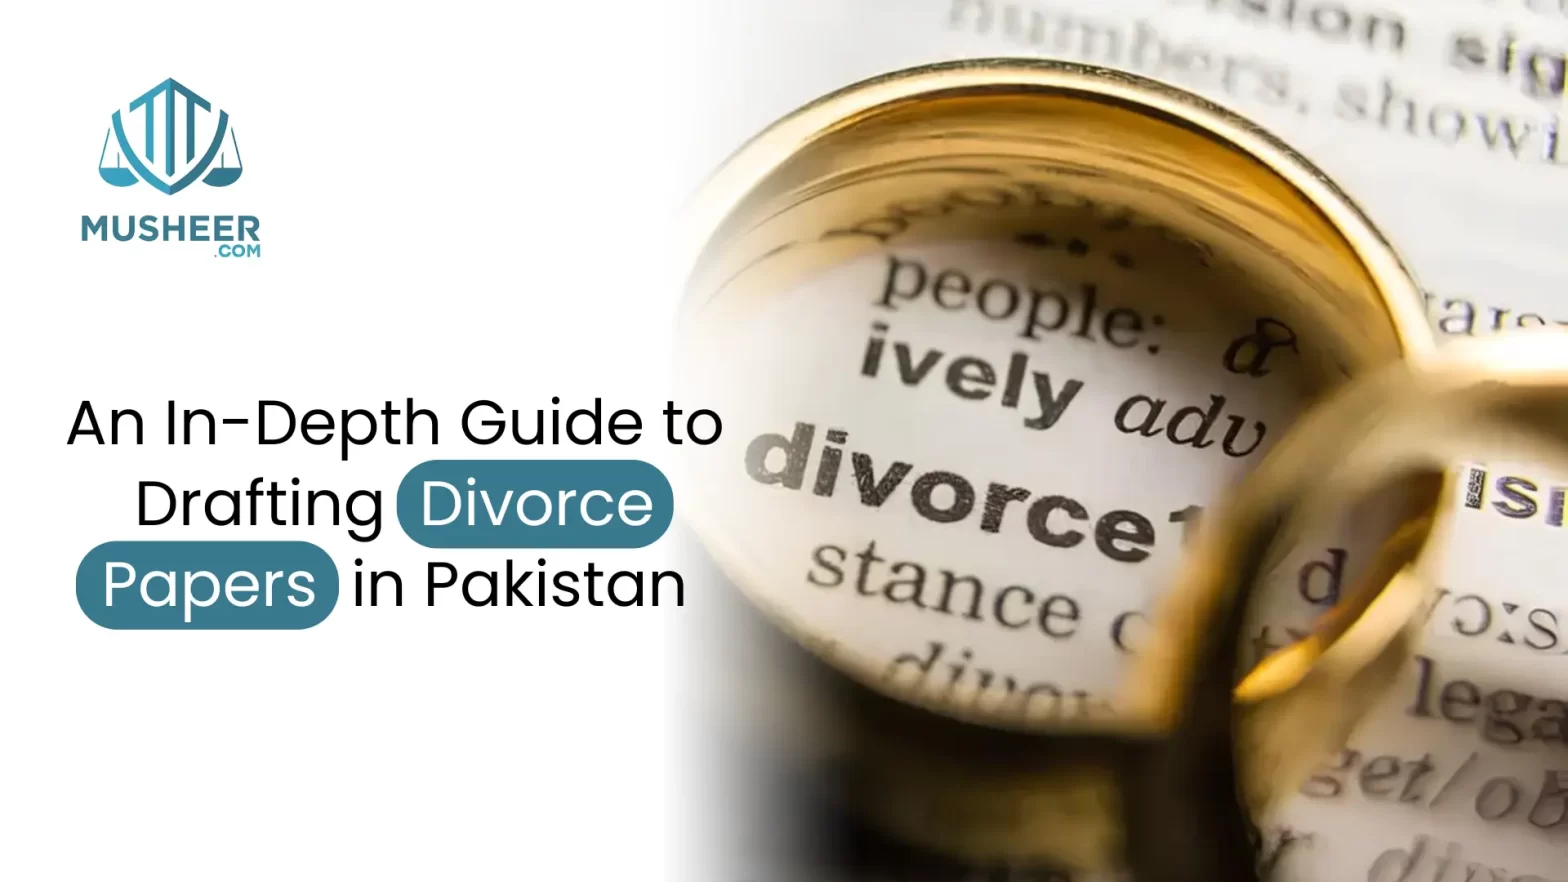 Drafting Divorce Papers in Pakistan